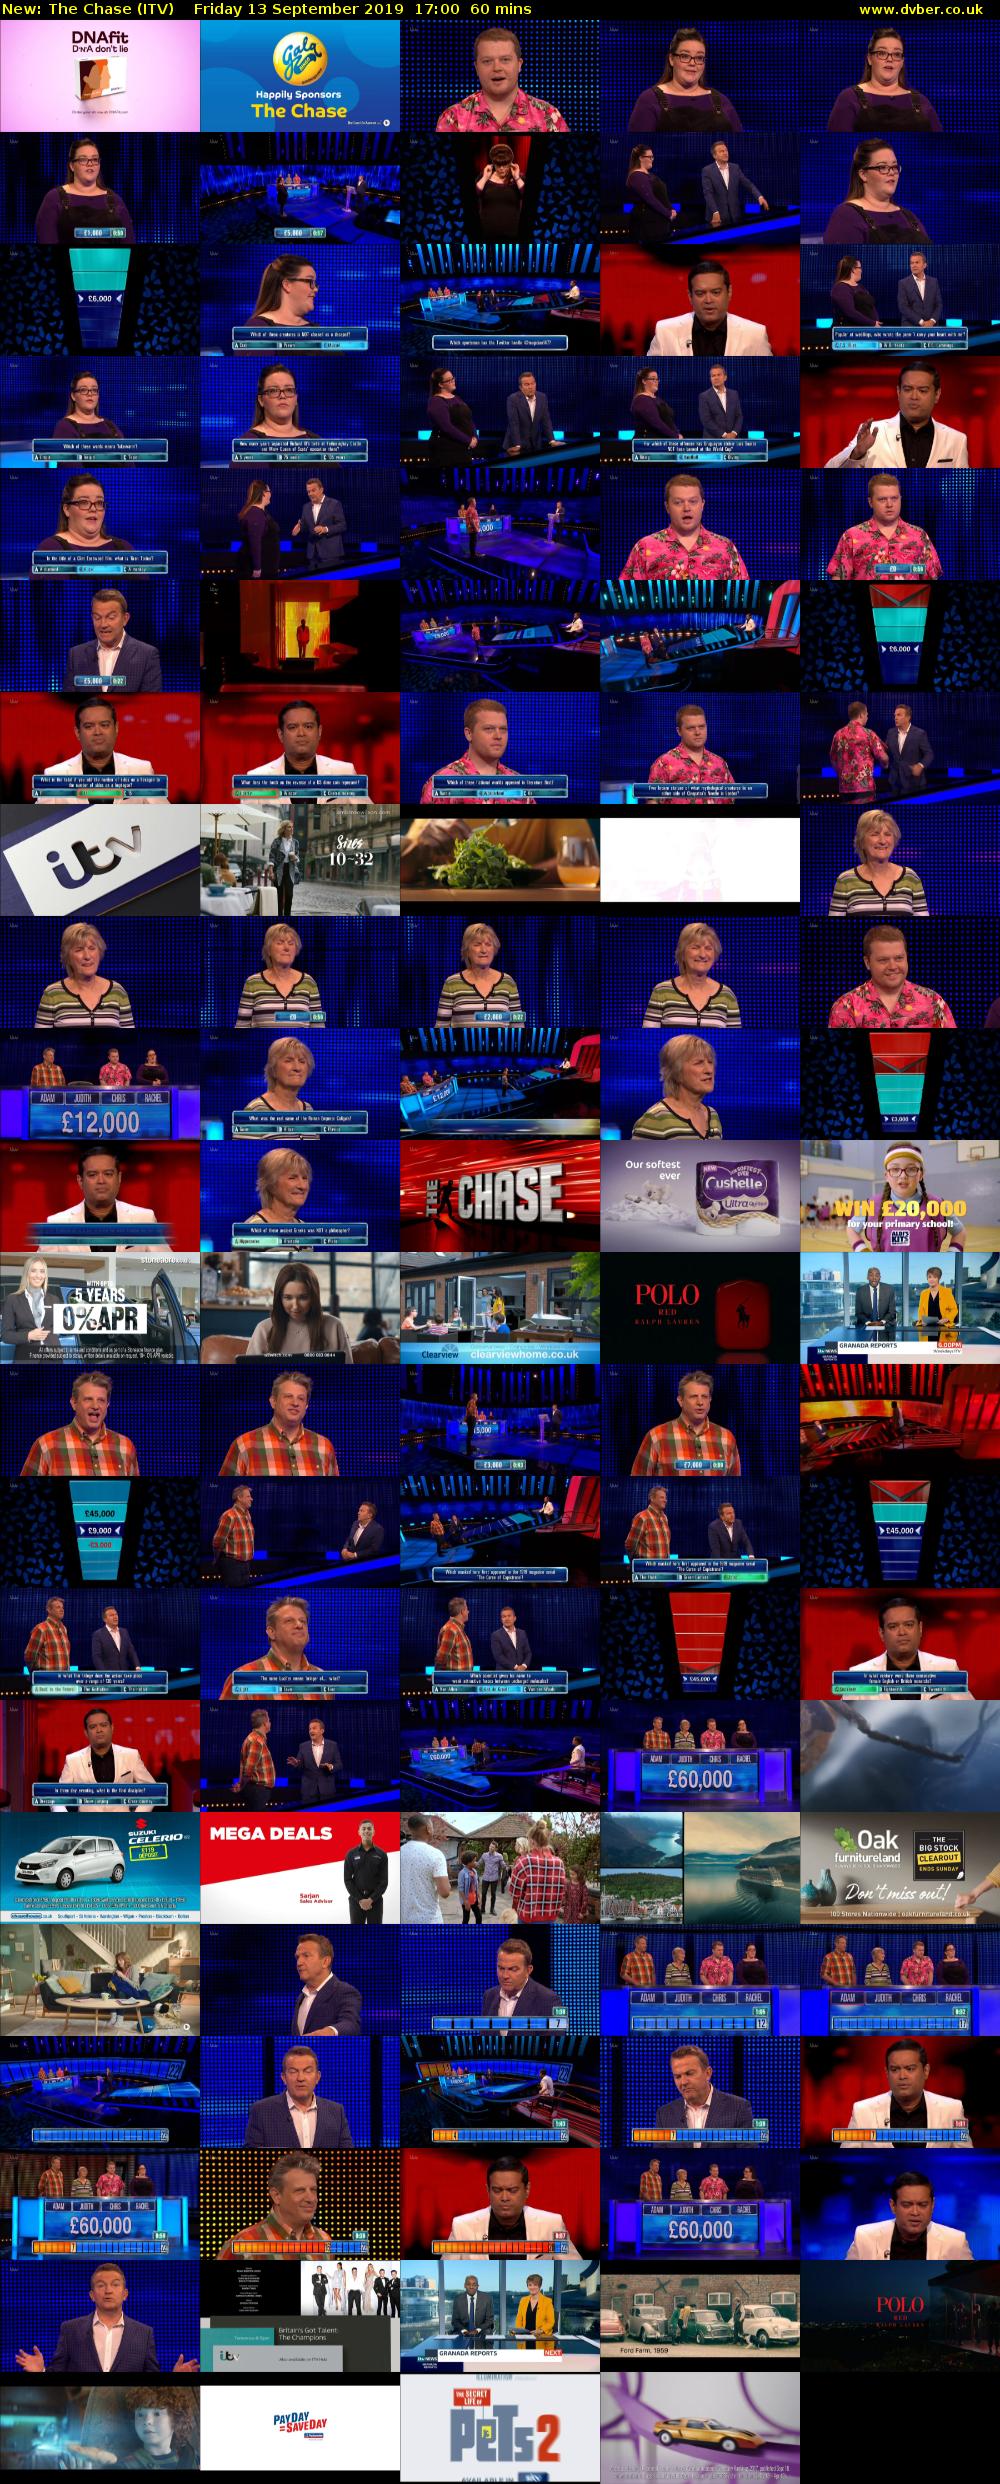 The Chase (ITV) Friday 13 September 2019 17:00 - 18:00